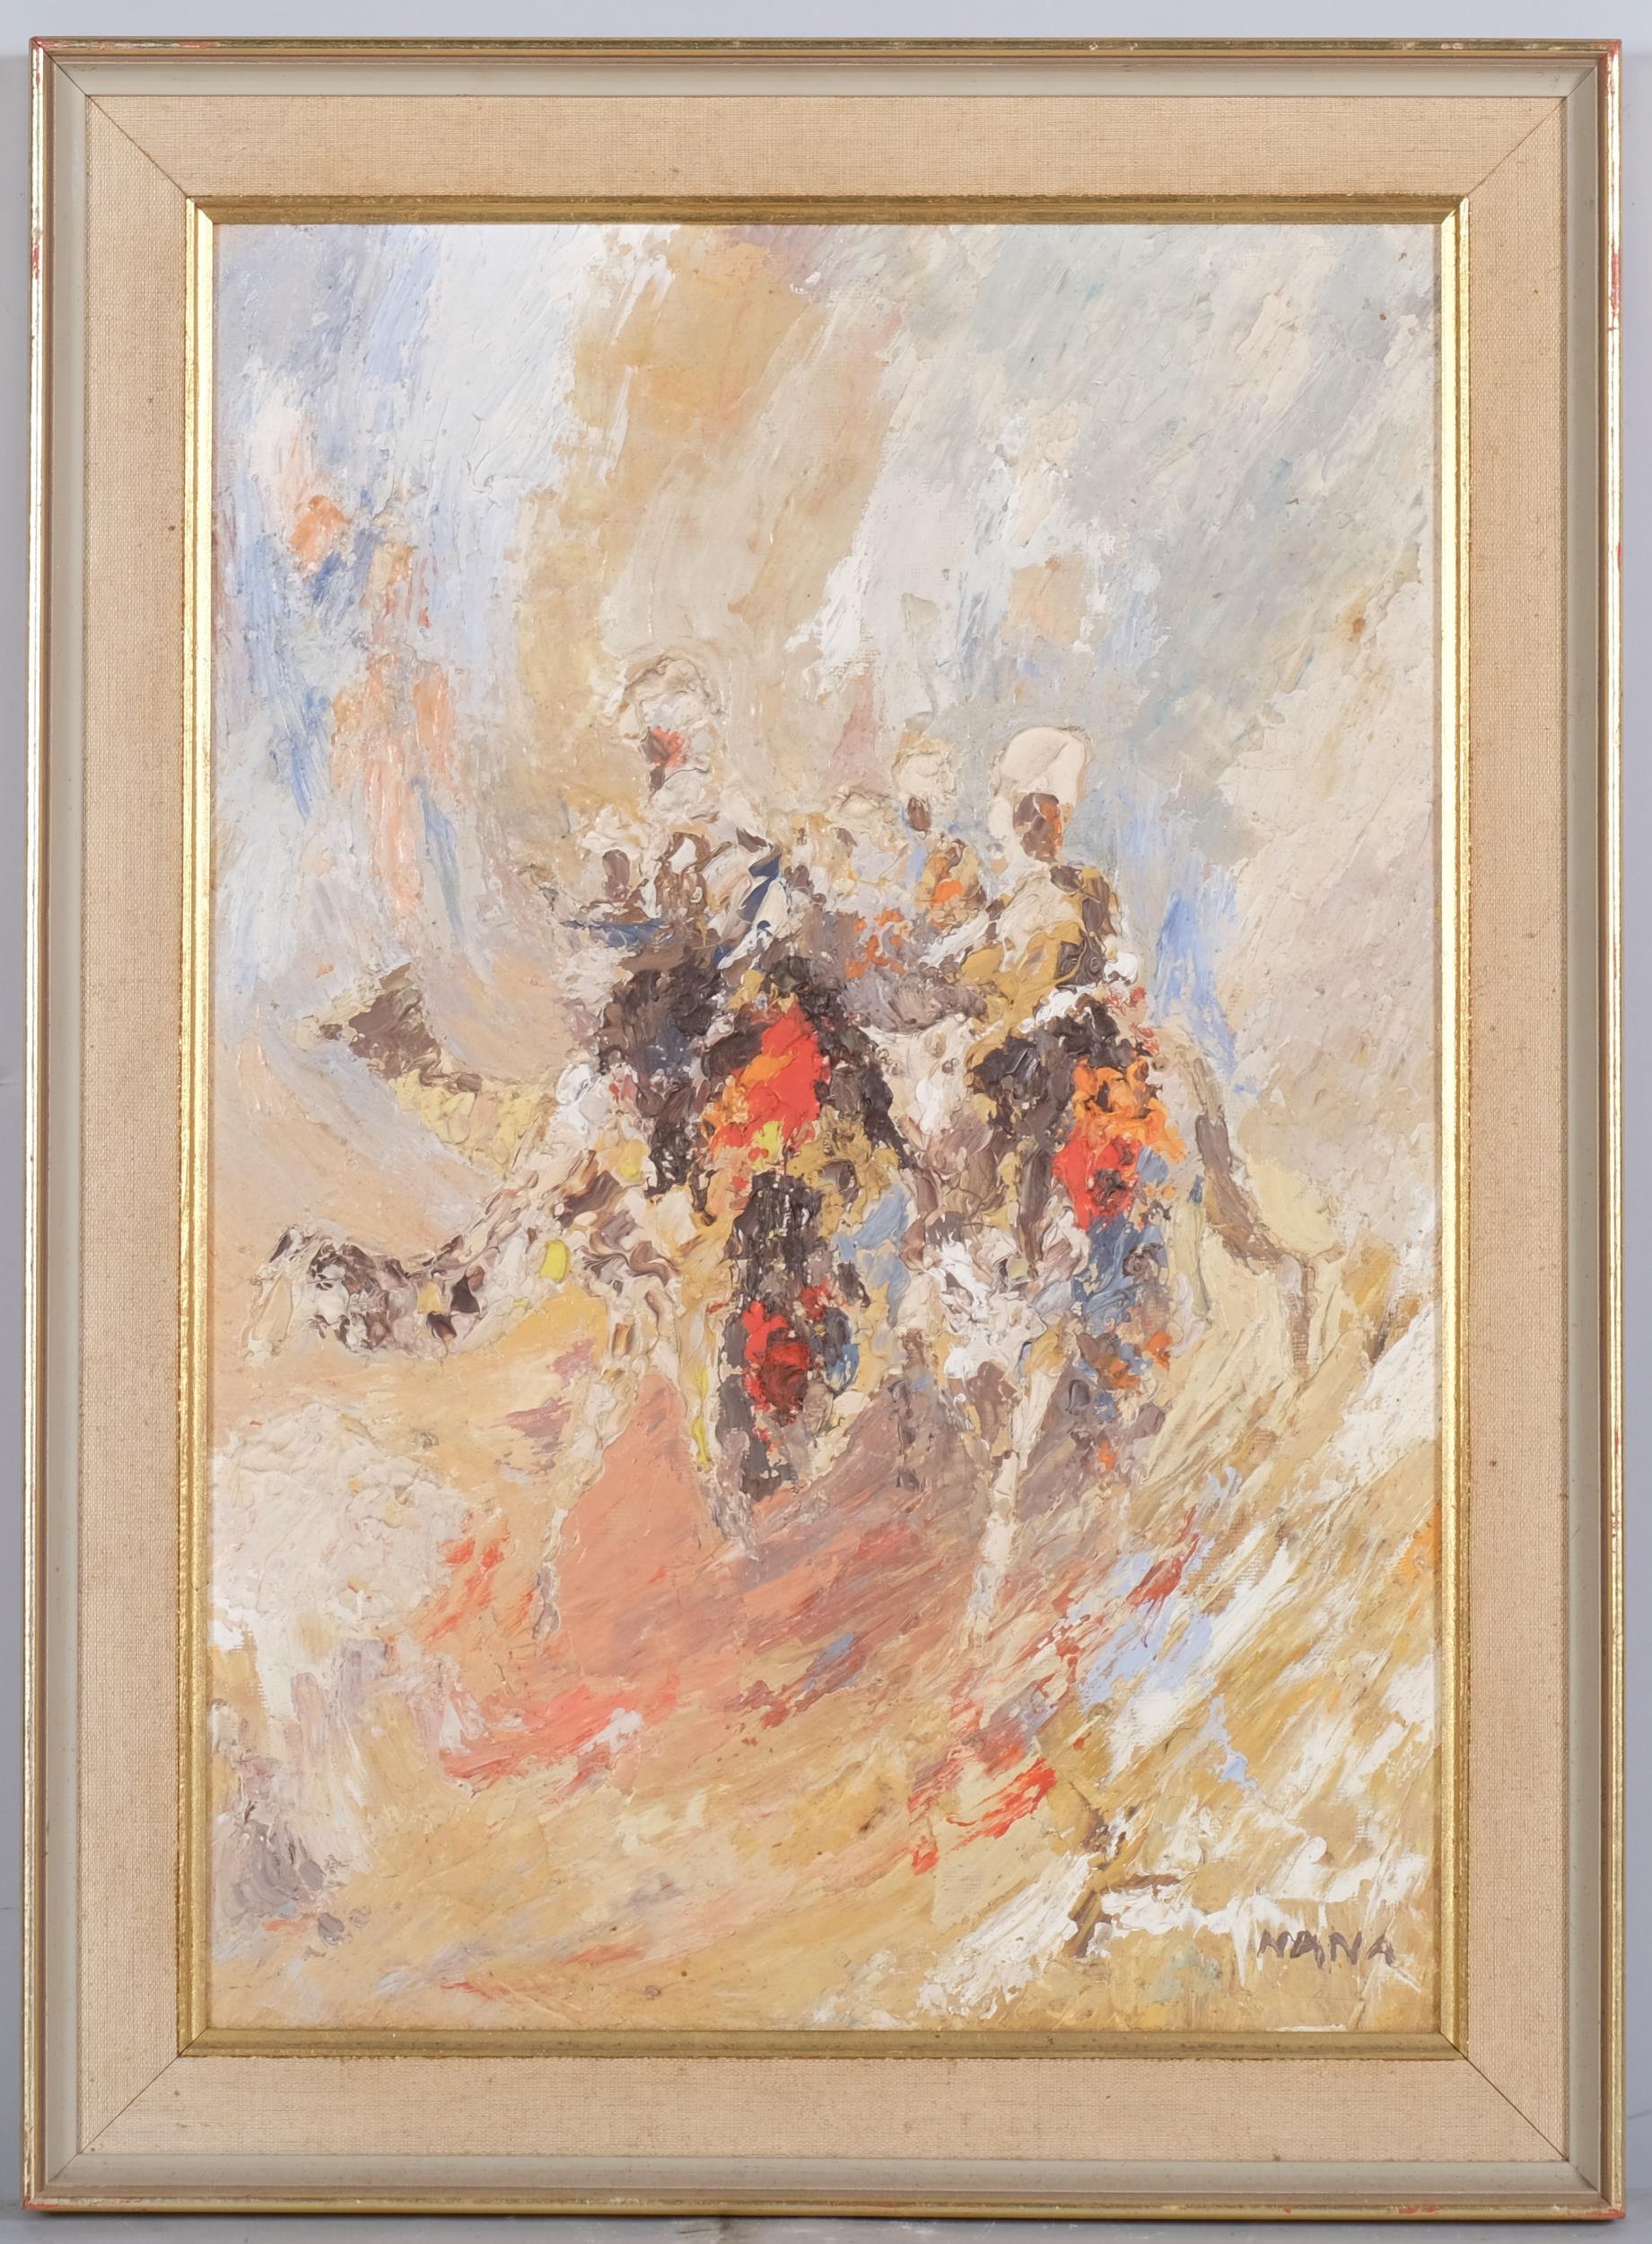 Ghassan Nana (born 1953), Arab horsemen, impressionist oil on board, signed, 44cm x 30cm, framed - Image 2 of 4